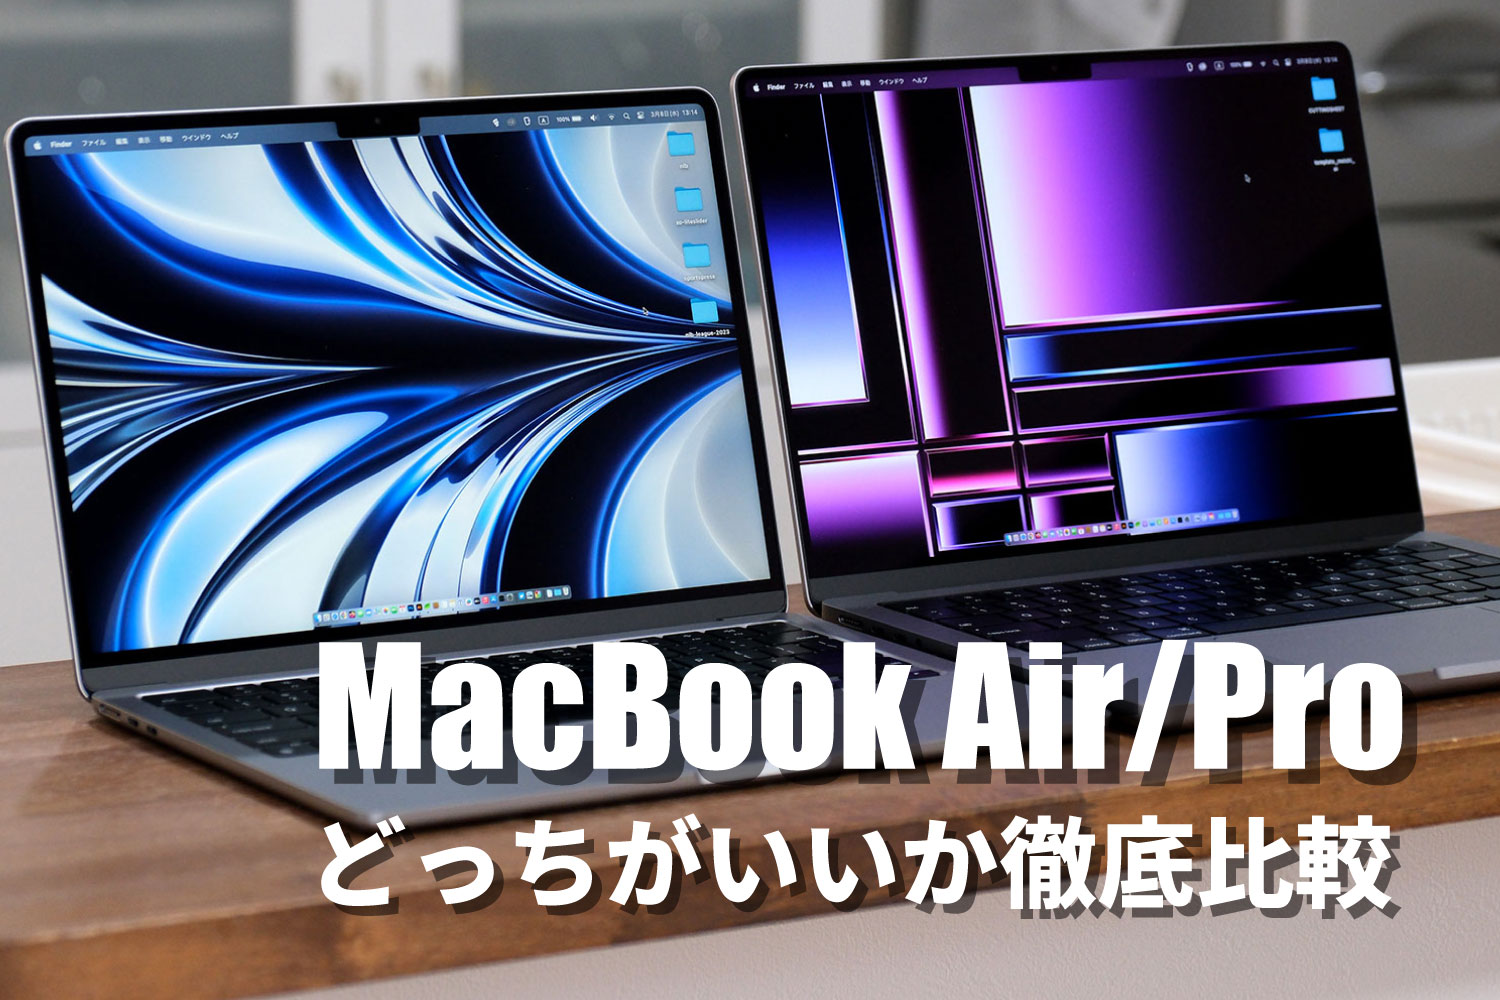 MacBook Air・MacBook Pro違いを比較